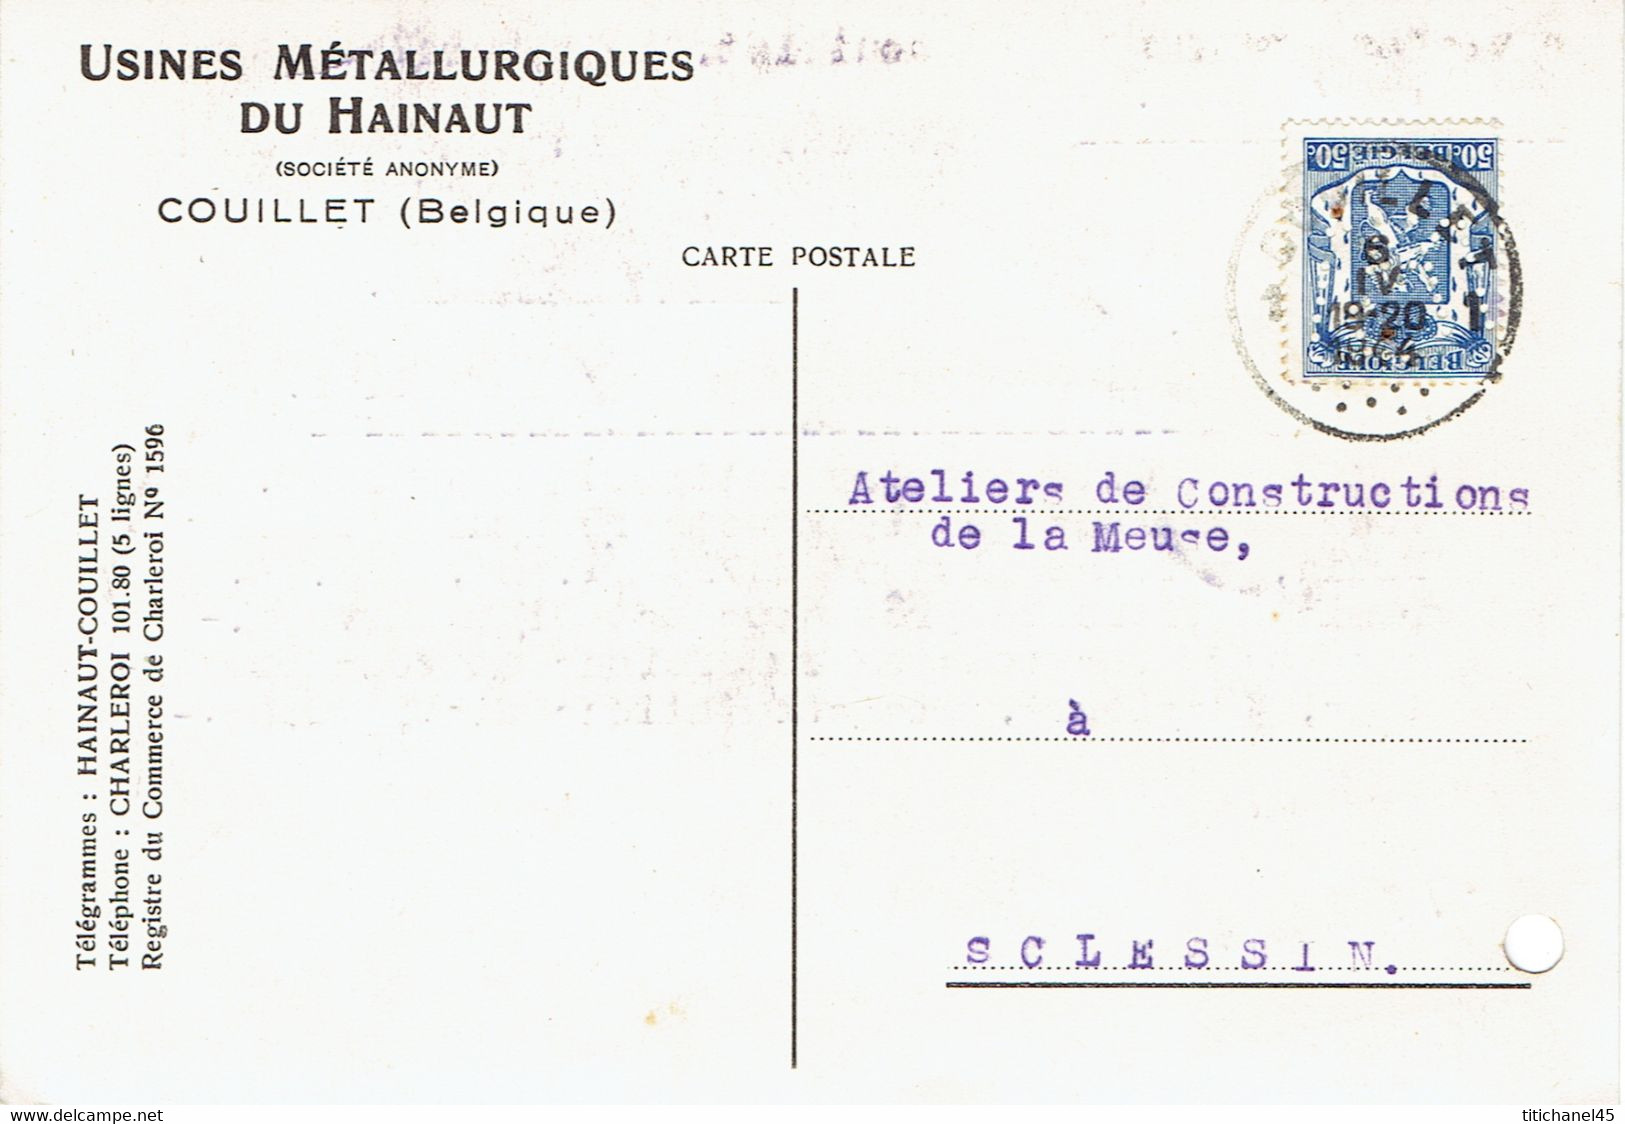 N°426 Op Postkaart Met Firmaperforatie (perfin) "U.M.H." Van USINES METALLURGIQUES DU HAINAUT Met Stempel COUILLET - 1934-51